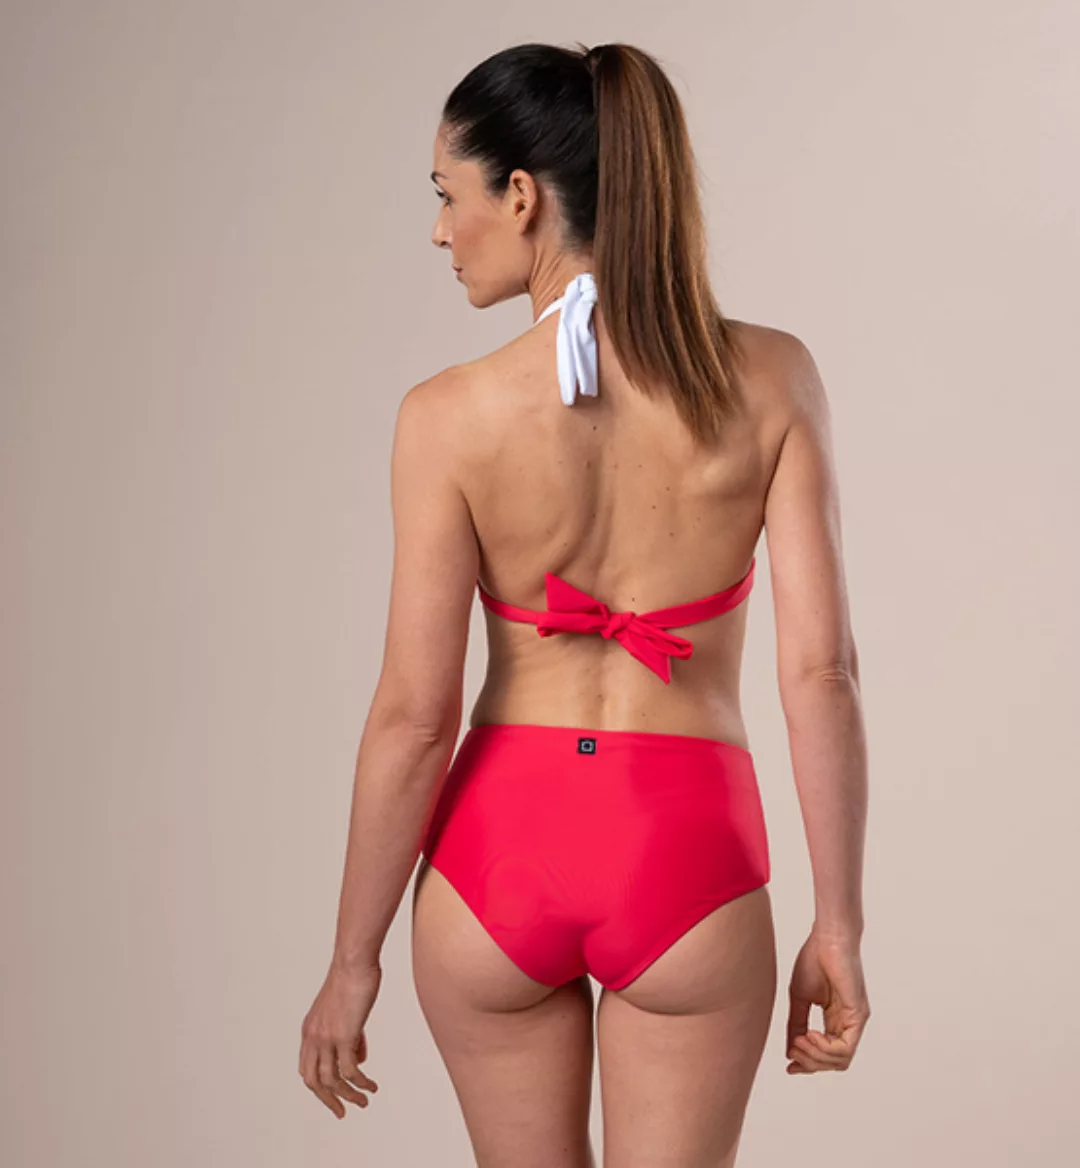 Öko-bikini-slip Mit Hoher Taille | Double Face günstig online kaufen